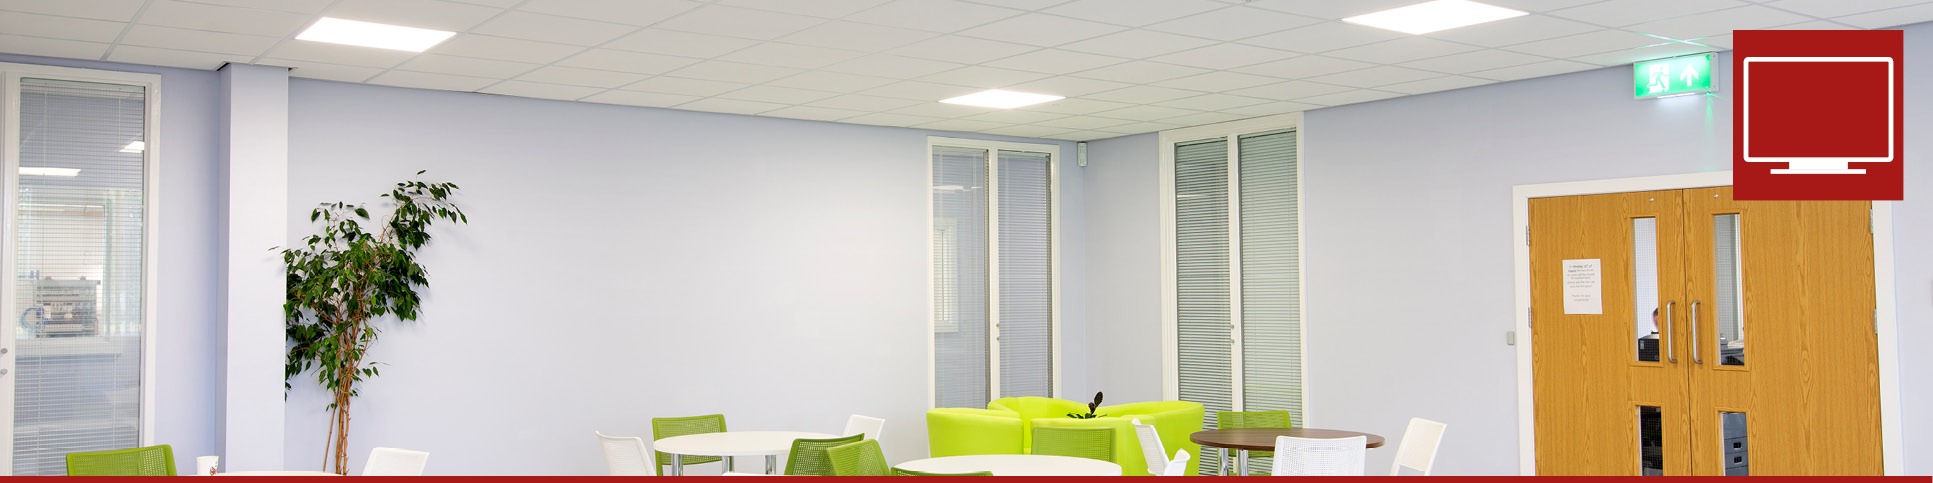 Tamlite Office break room LED lighting header with red icon